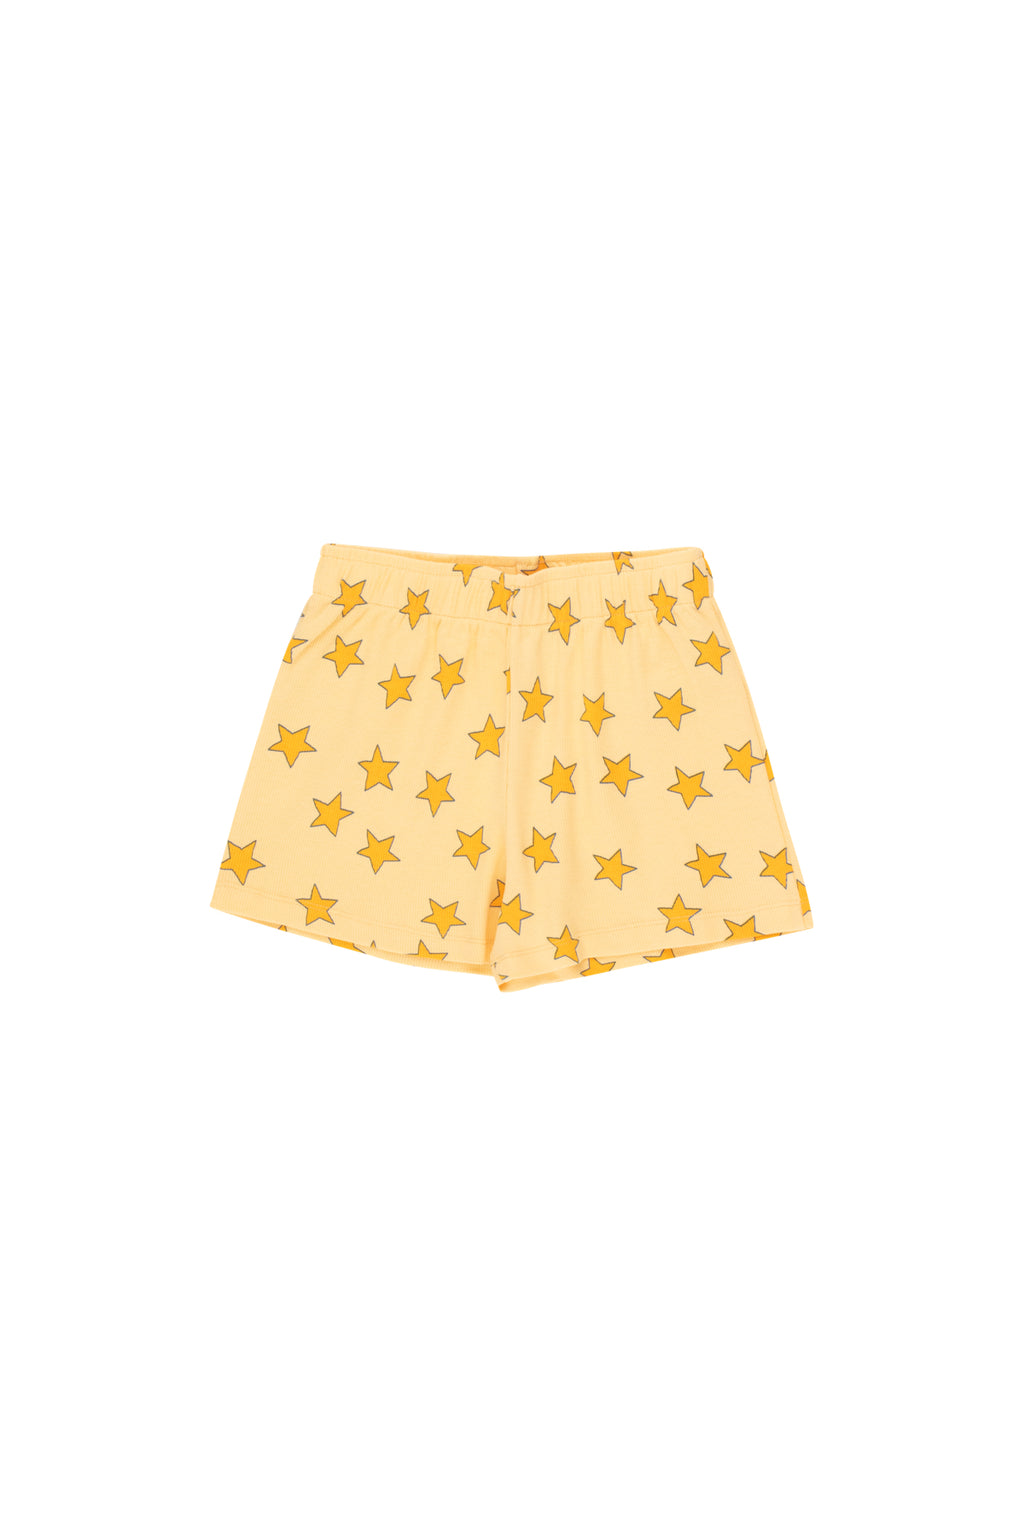 Tiny Cottons Stars Short - Mellow Yellow